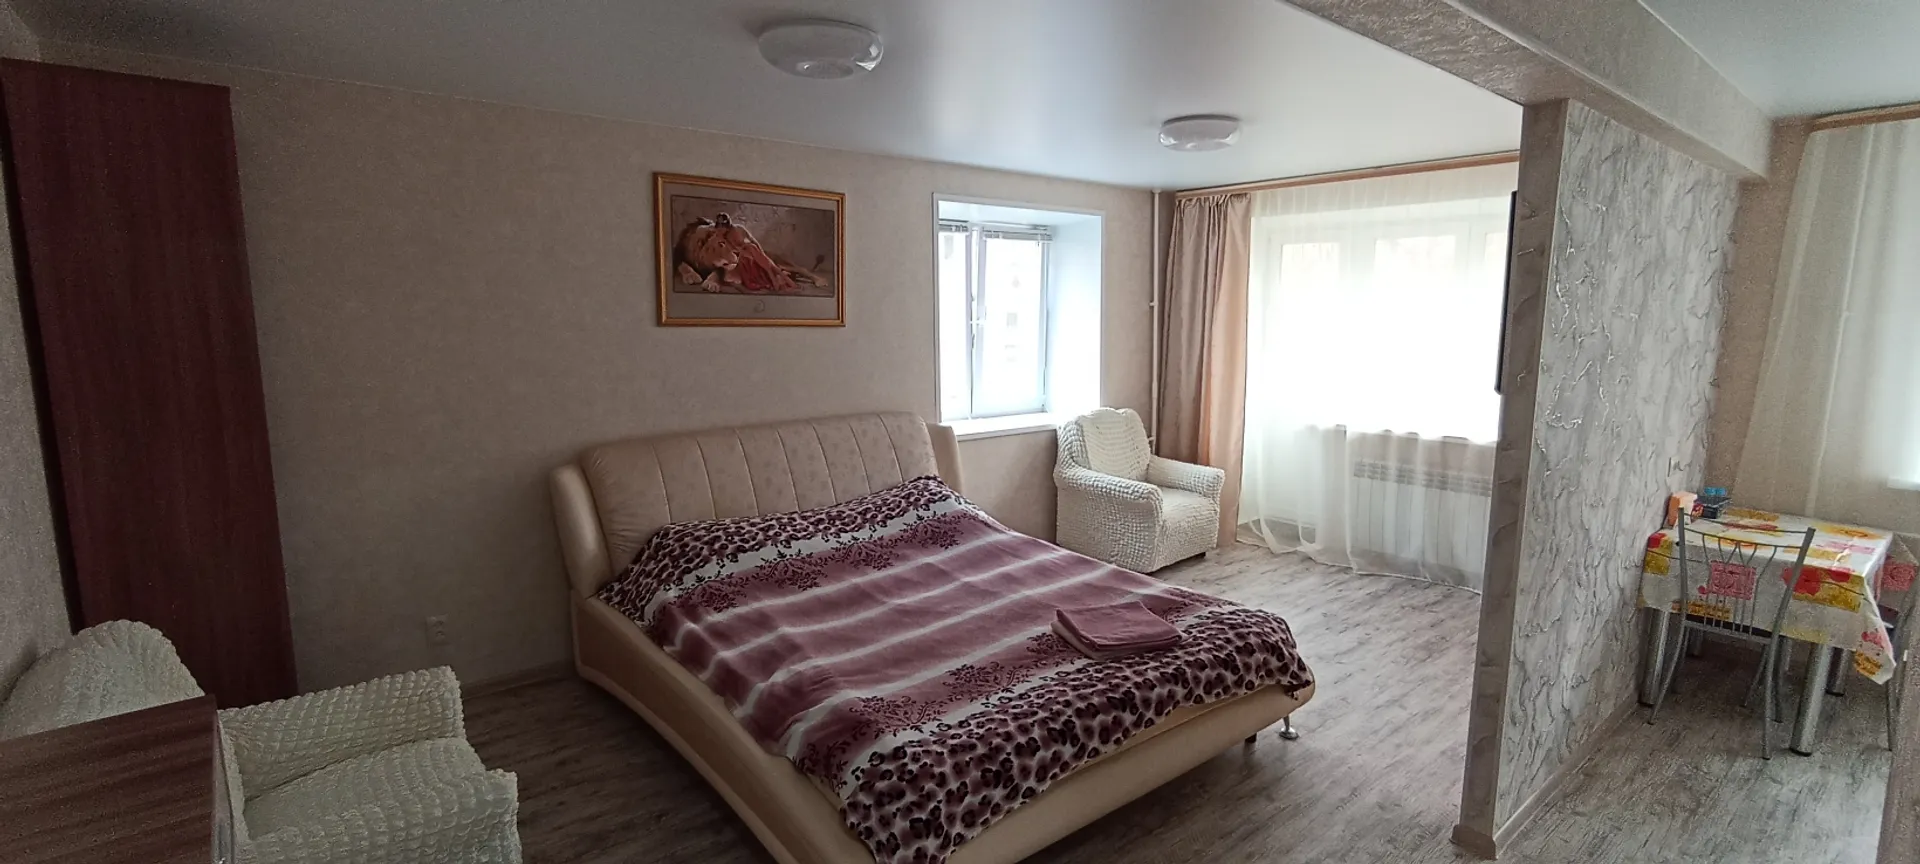 "В центре" 1-комнатная квартира в Железногорске - фото 1